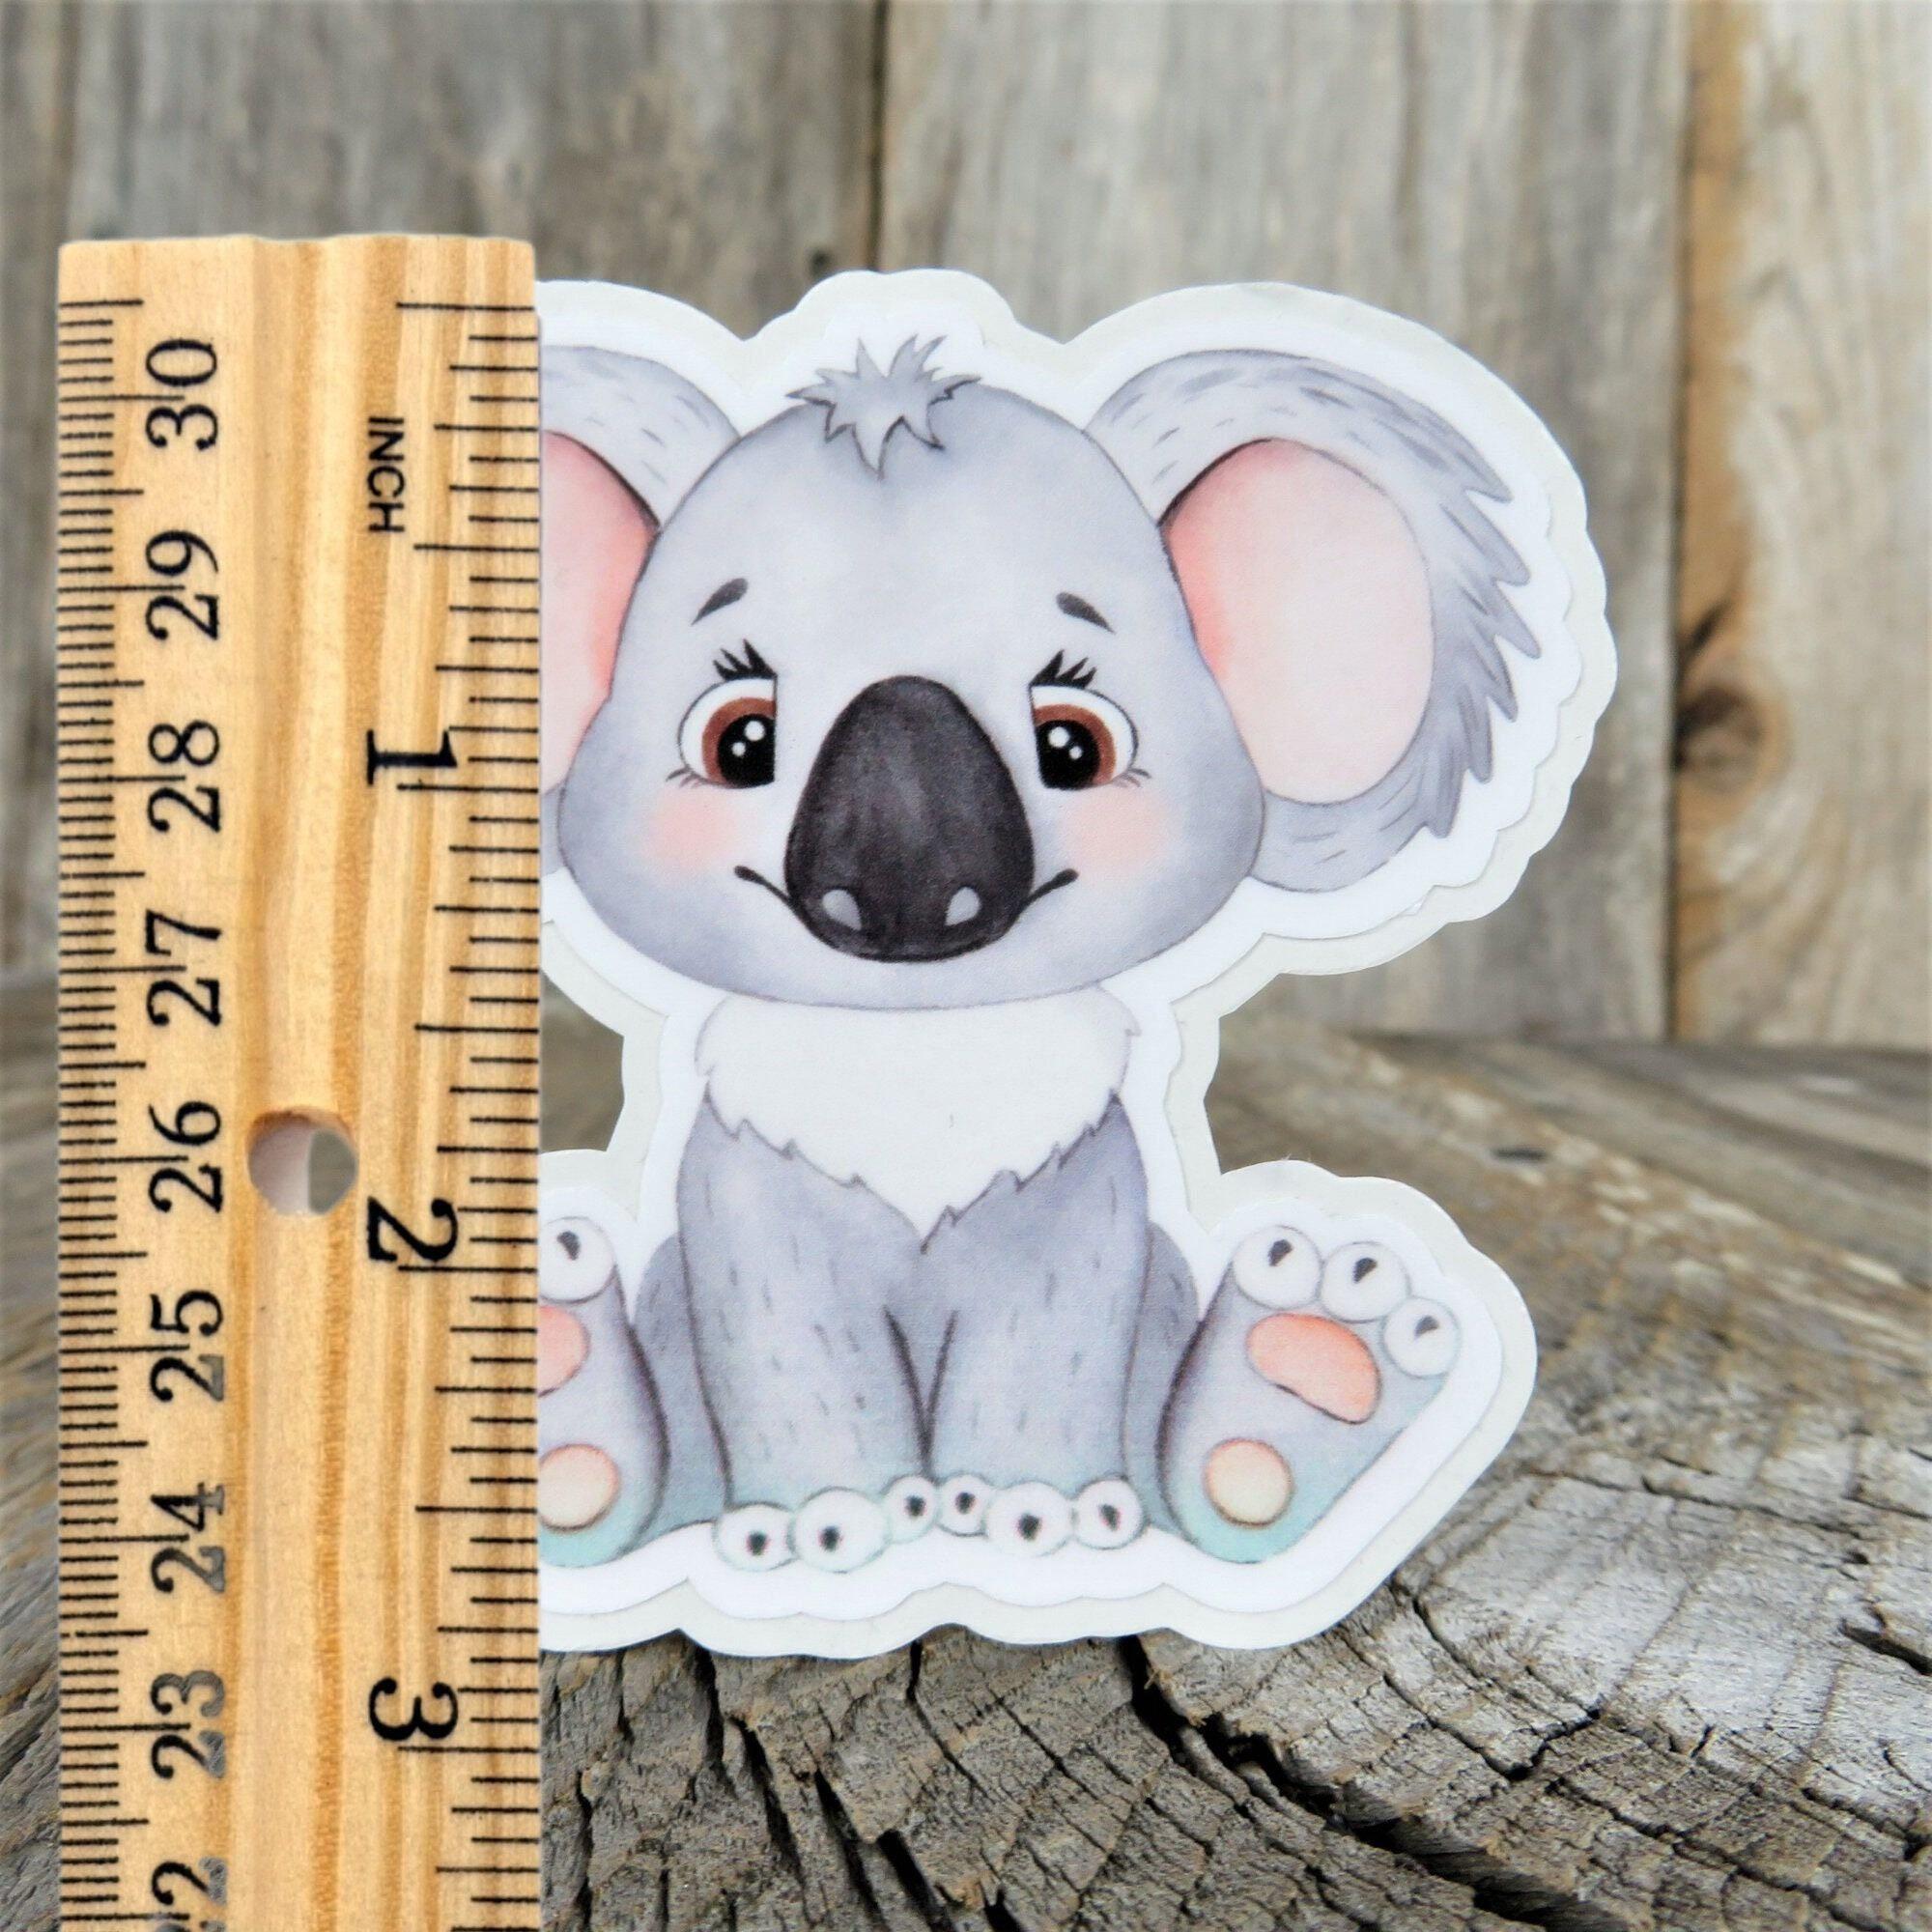 Products :: Koala Bear Sticker Decal Full Color Cartoon Waterproof